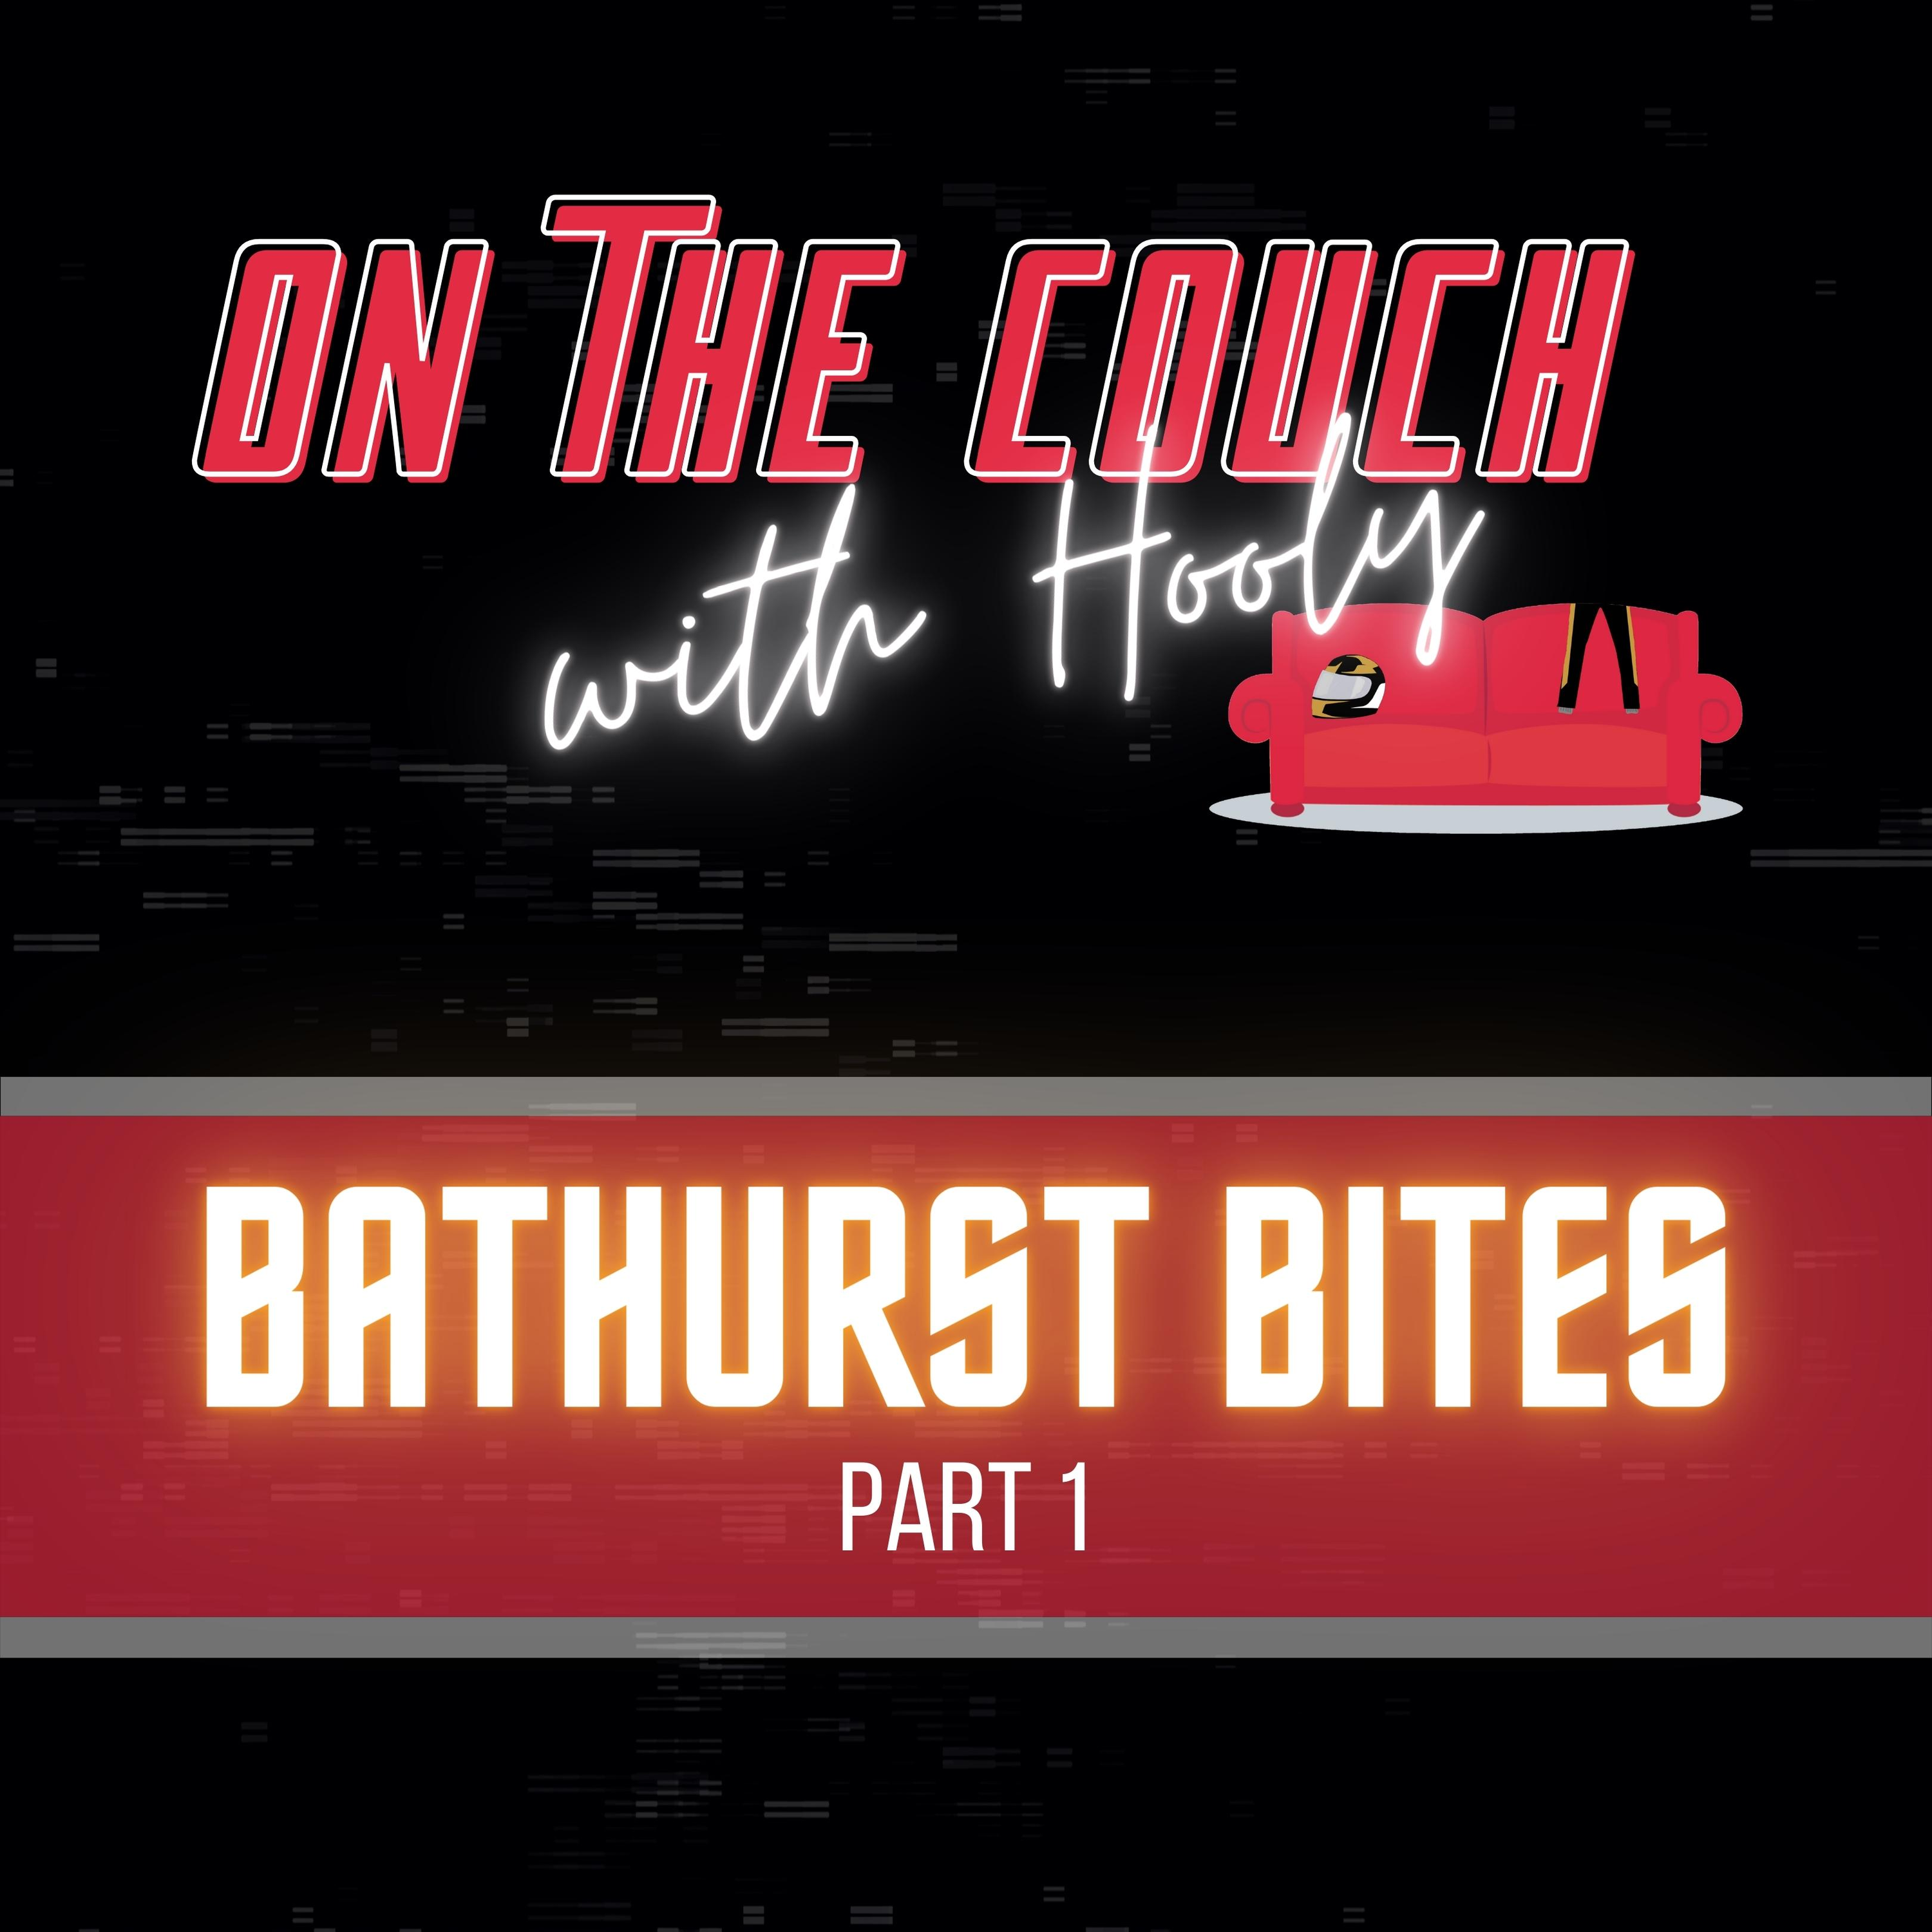 Bathurst Bites Part 1